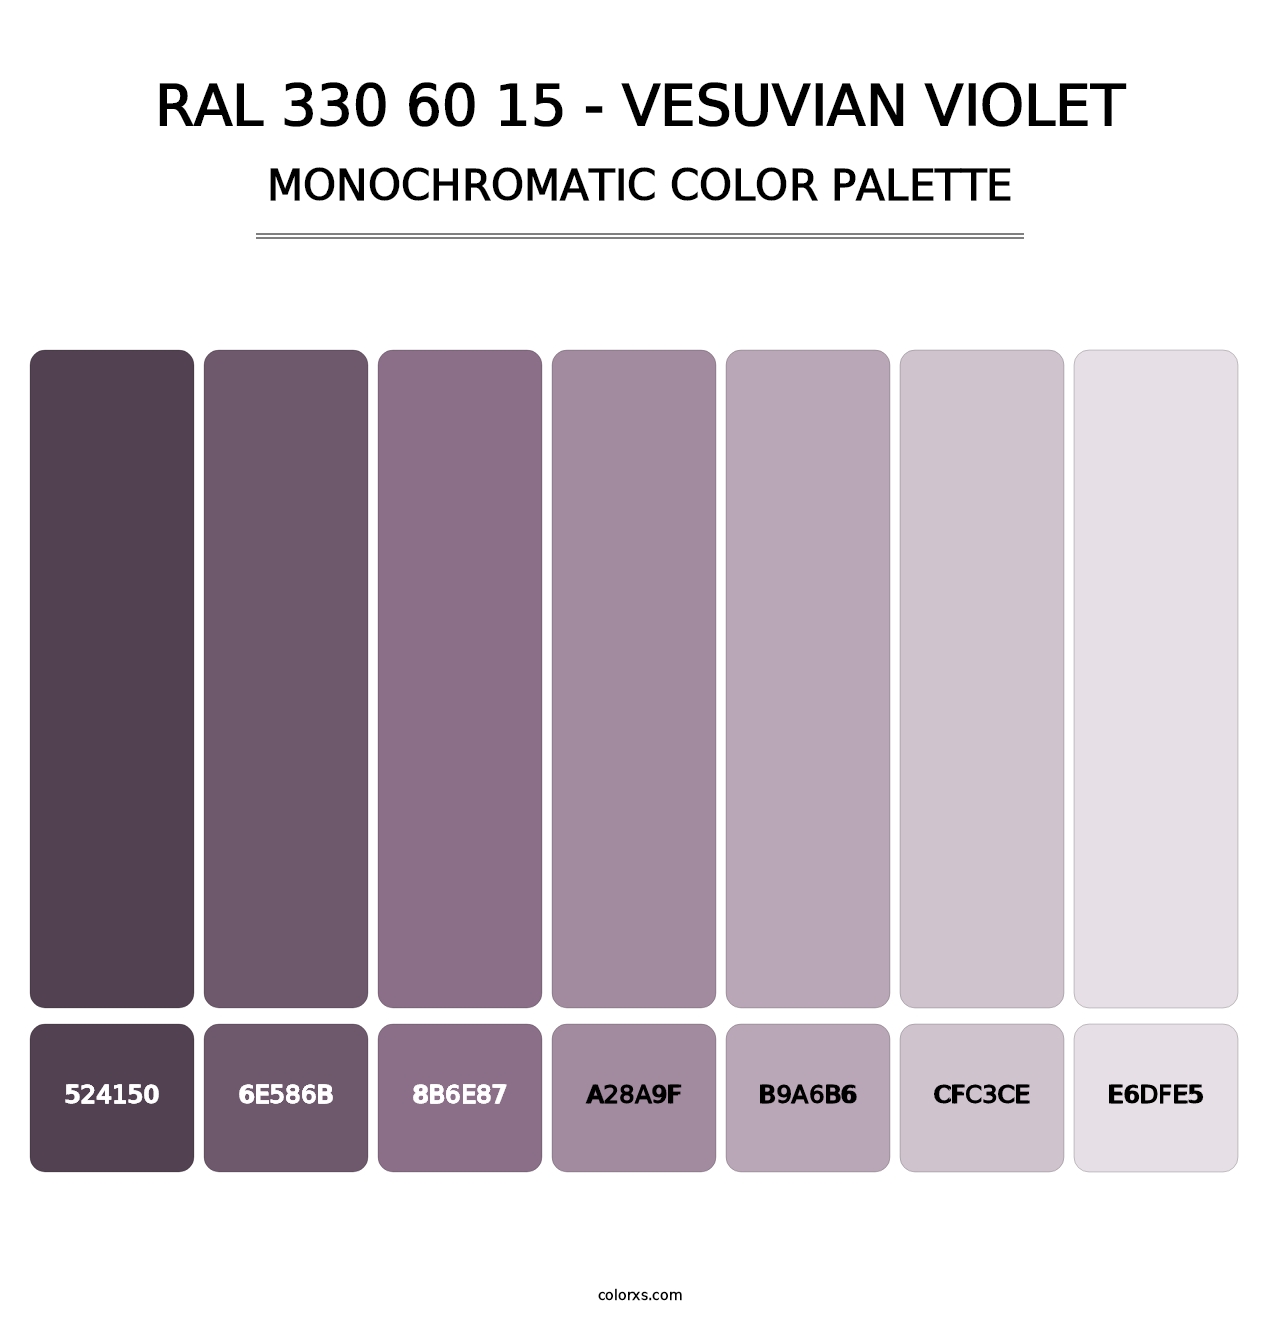 RAL 330 60 15 - Vesuvian Violet - Monochromatic Color Palette